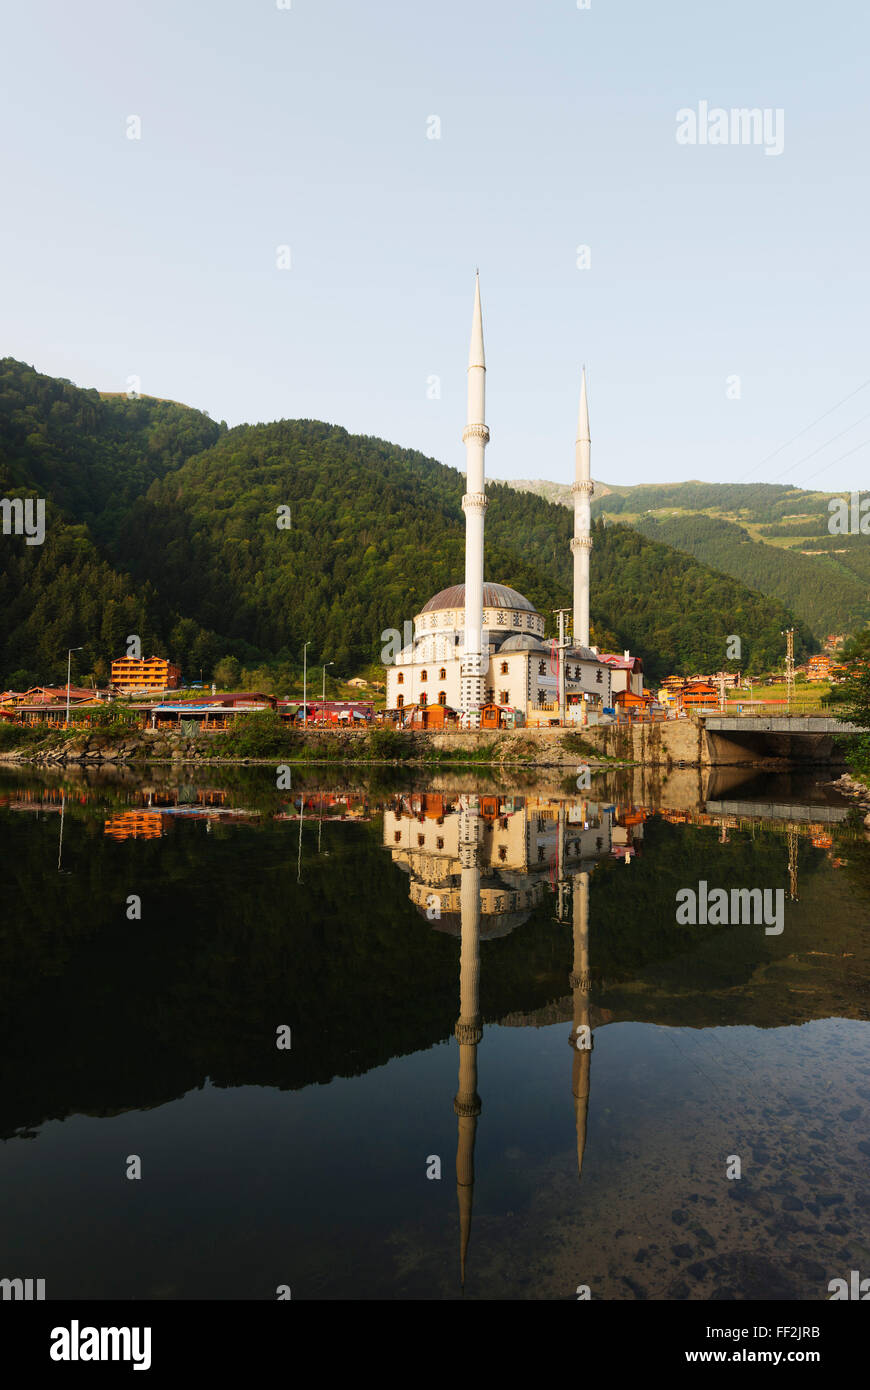 La moschea RMakeside, UzungoRM aRMpine resort, BRMack Sea Coast area, Trabzon Provincia, AnatoRMia, Turchia, Asia Minore, Eurasia Foto Stock